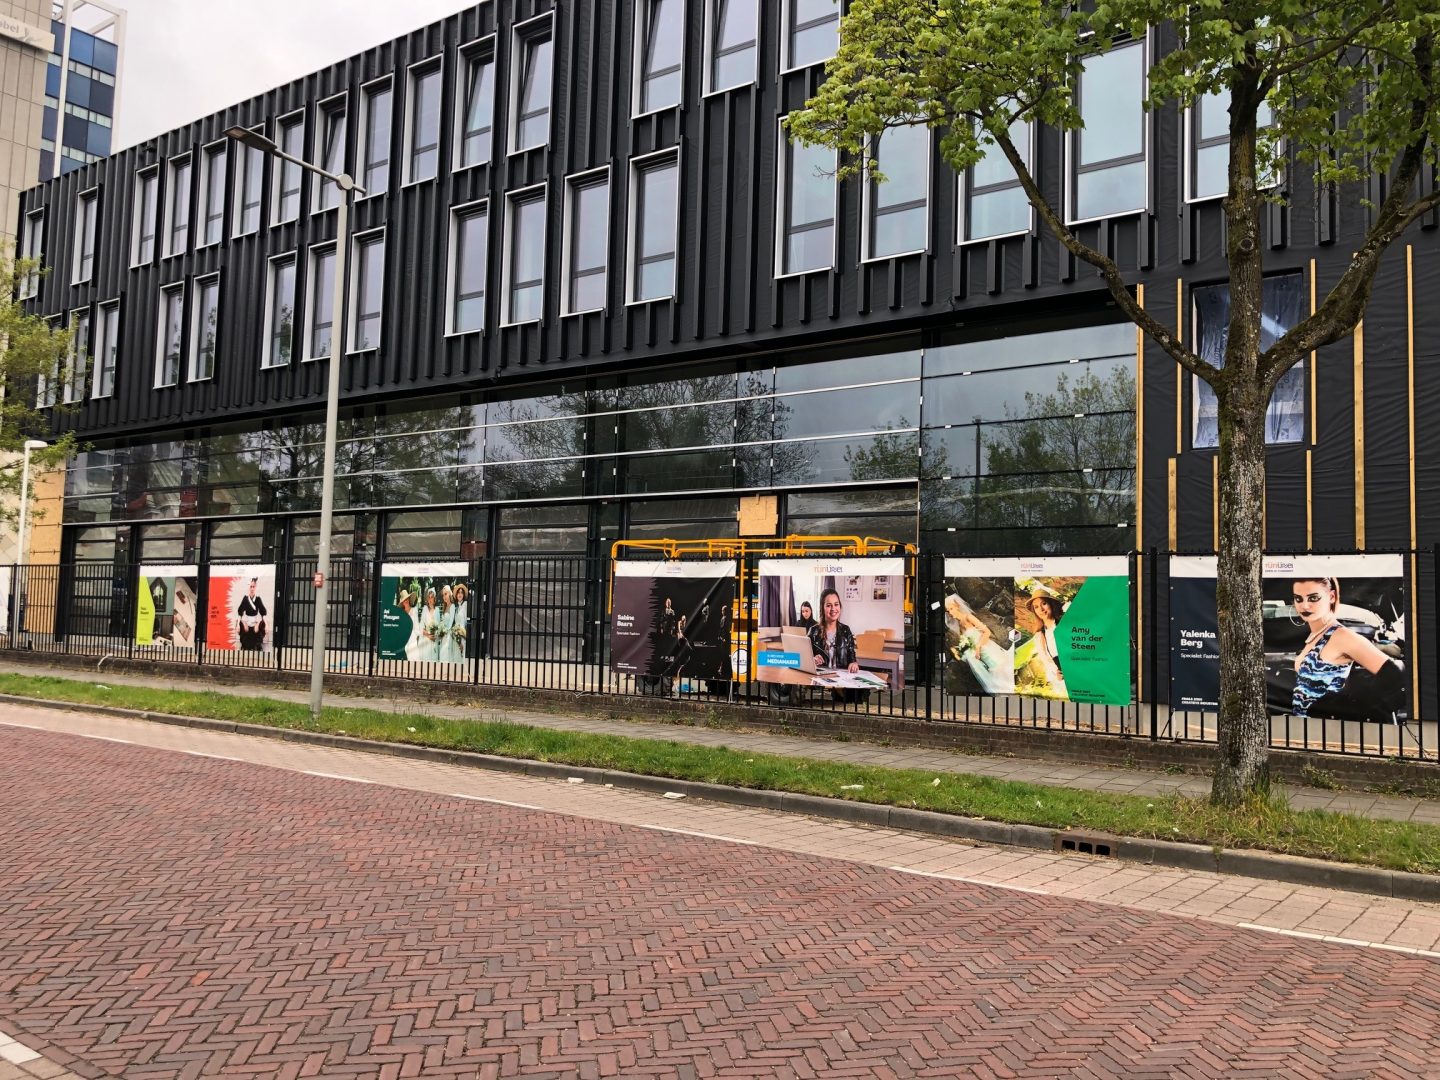 ENKA-campus Rijn IJssel Hochschule wählt Compact Sektionaltore